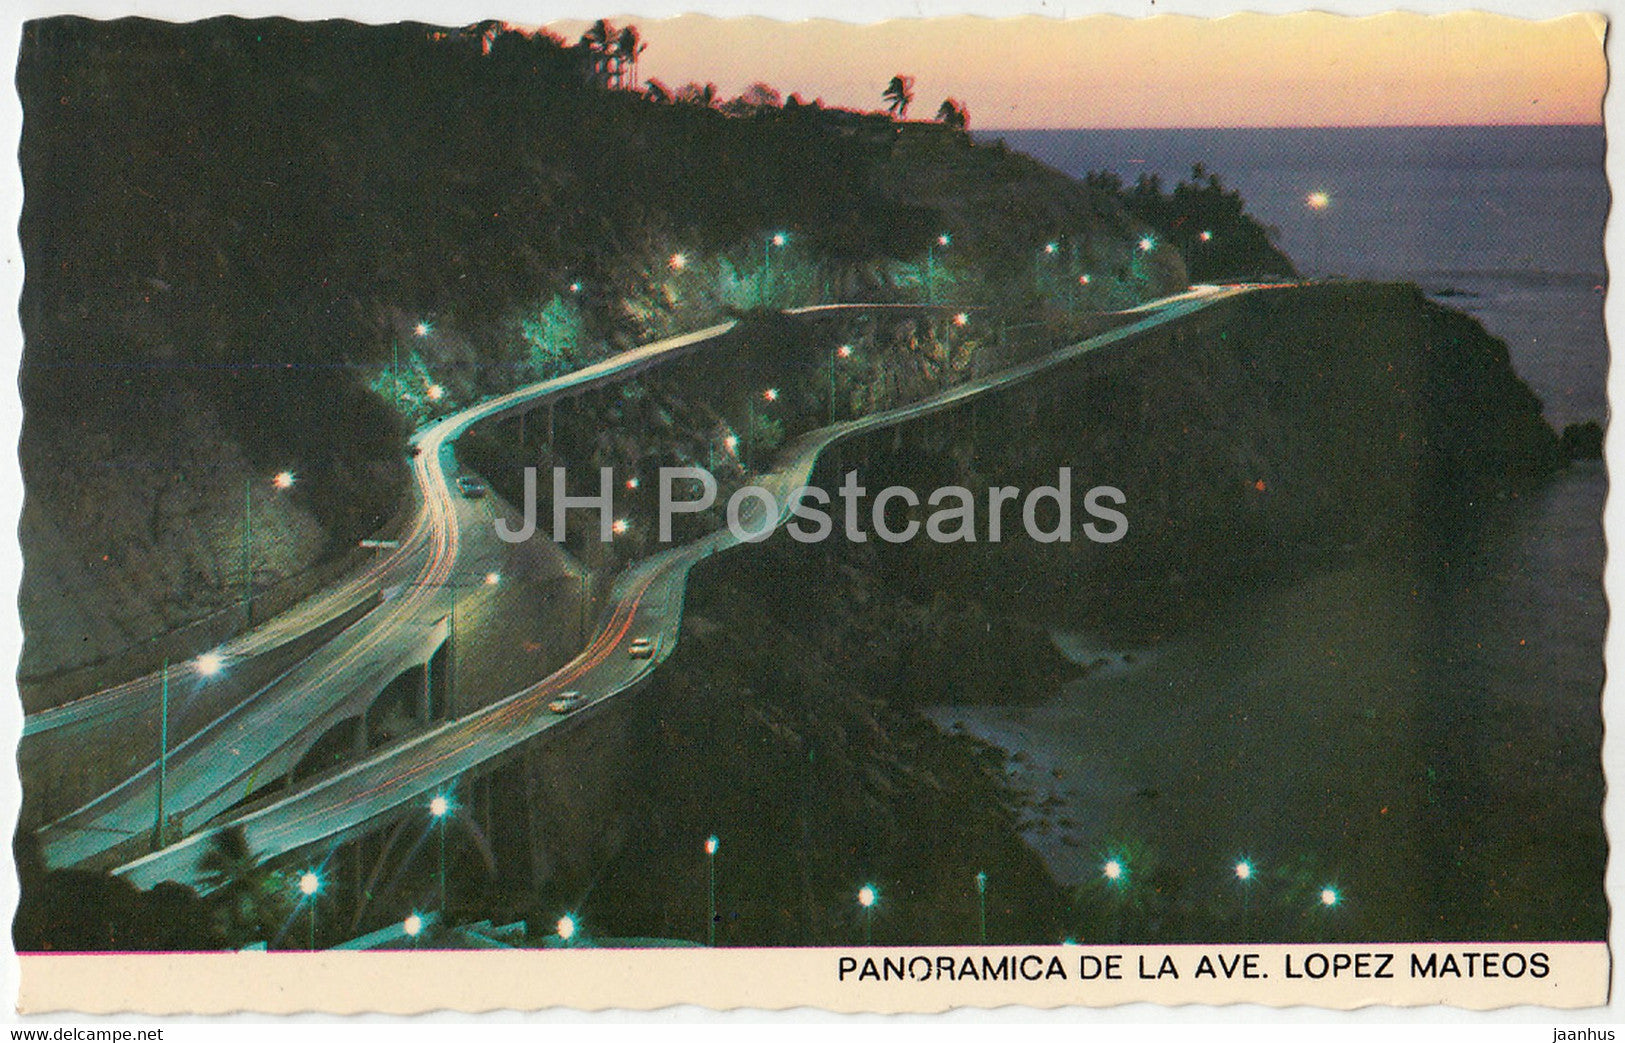 Panorama de la Ave. Lopez Mateos - Mexico - unused - JH Postcards